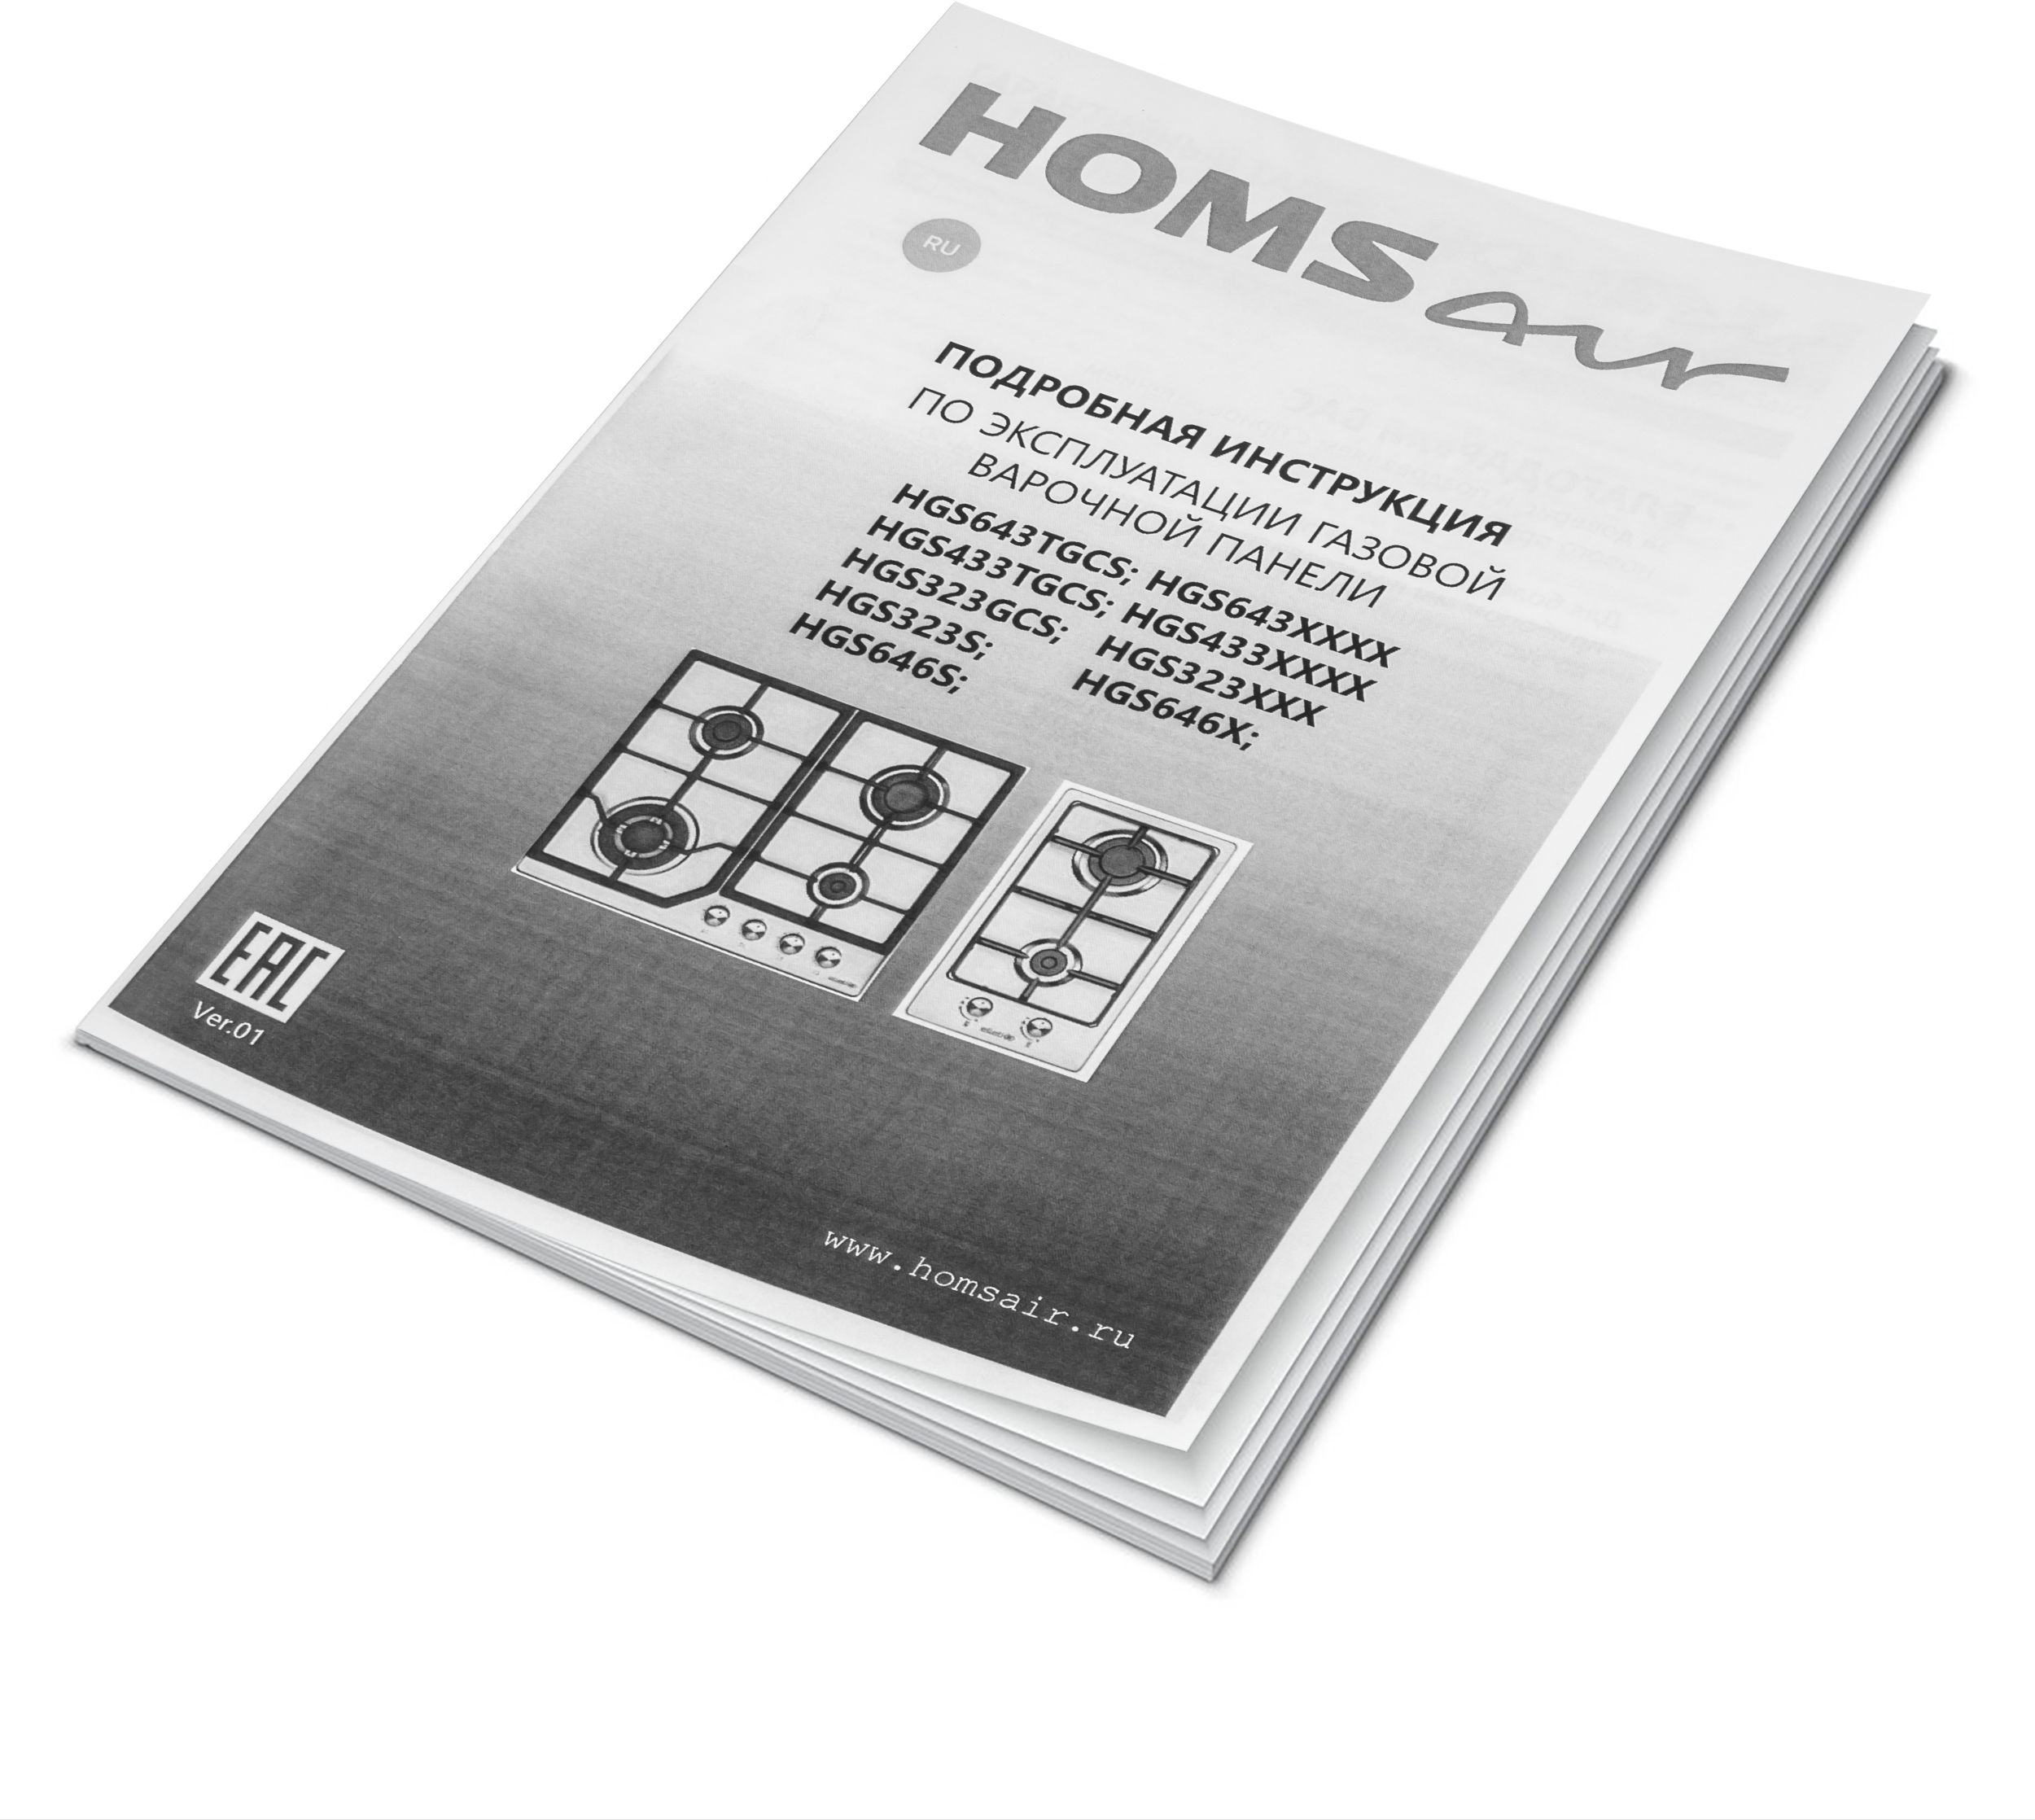 Встраиваемая варочная панель HOMSair HGS646S